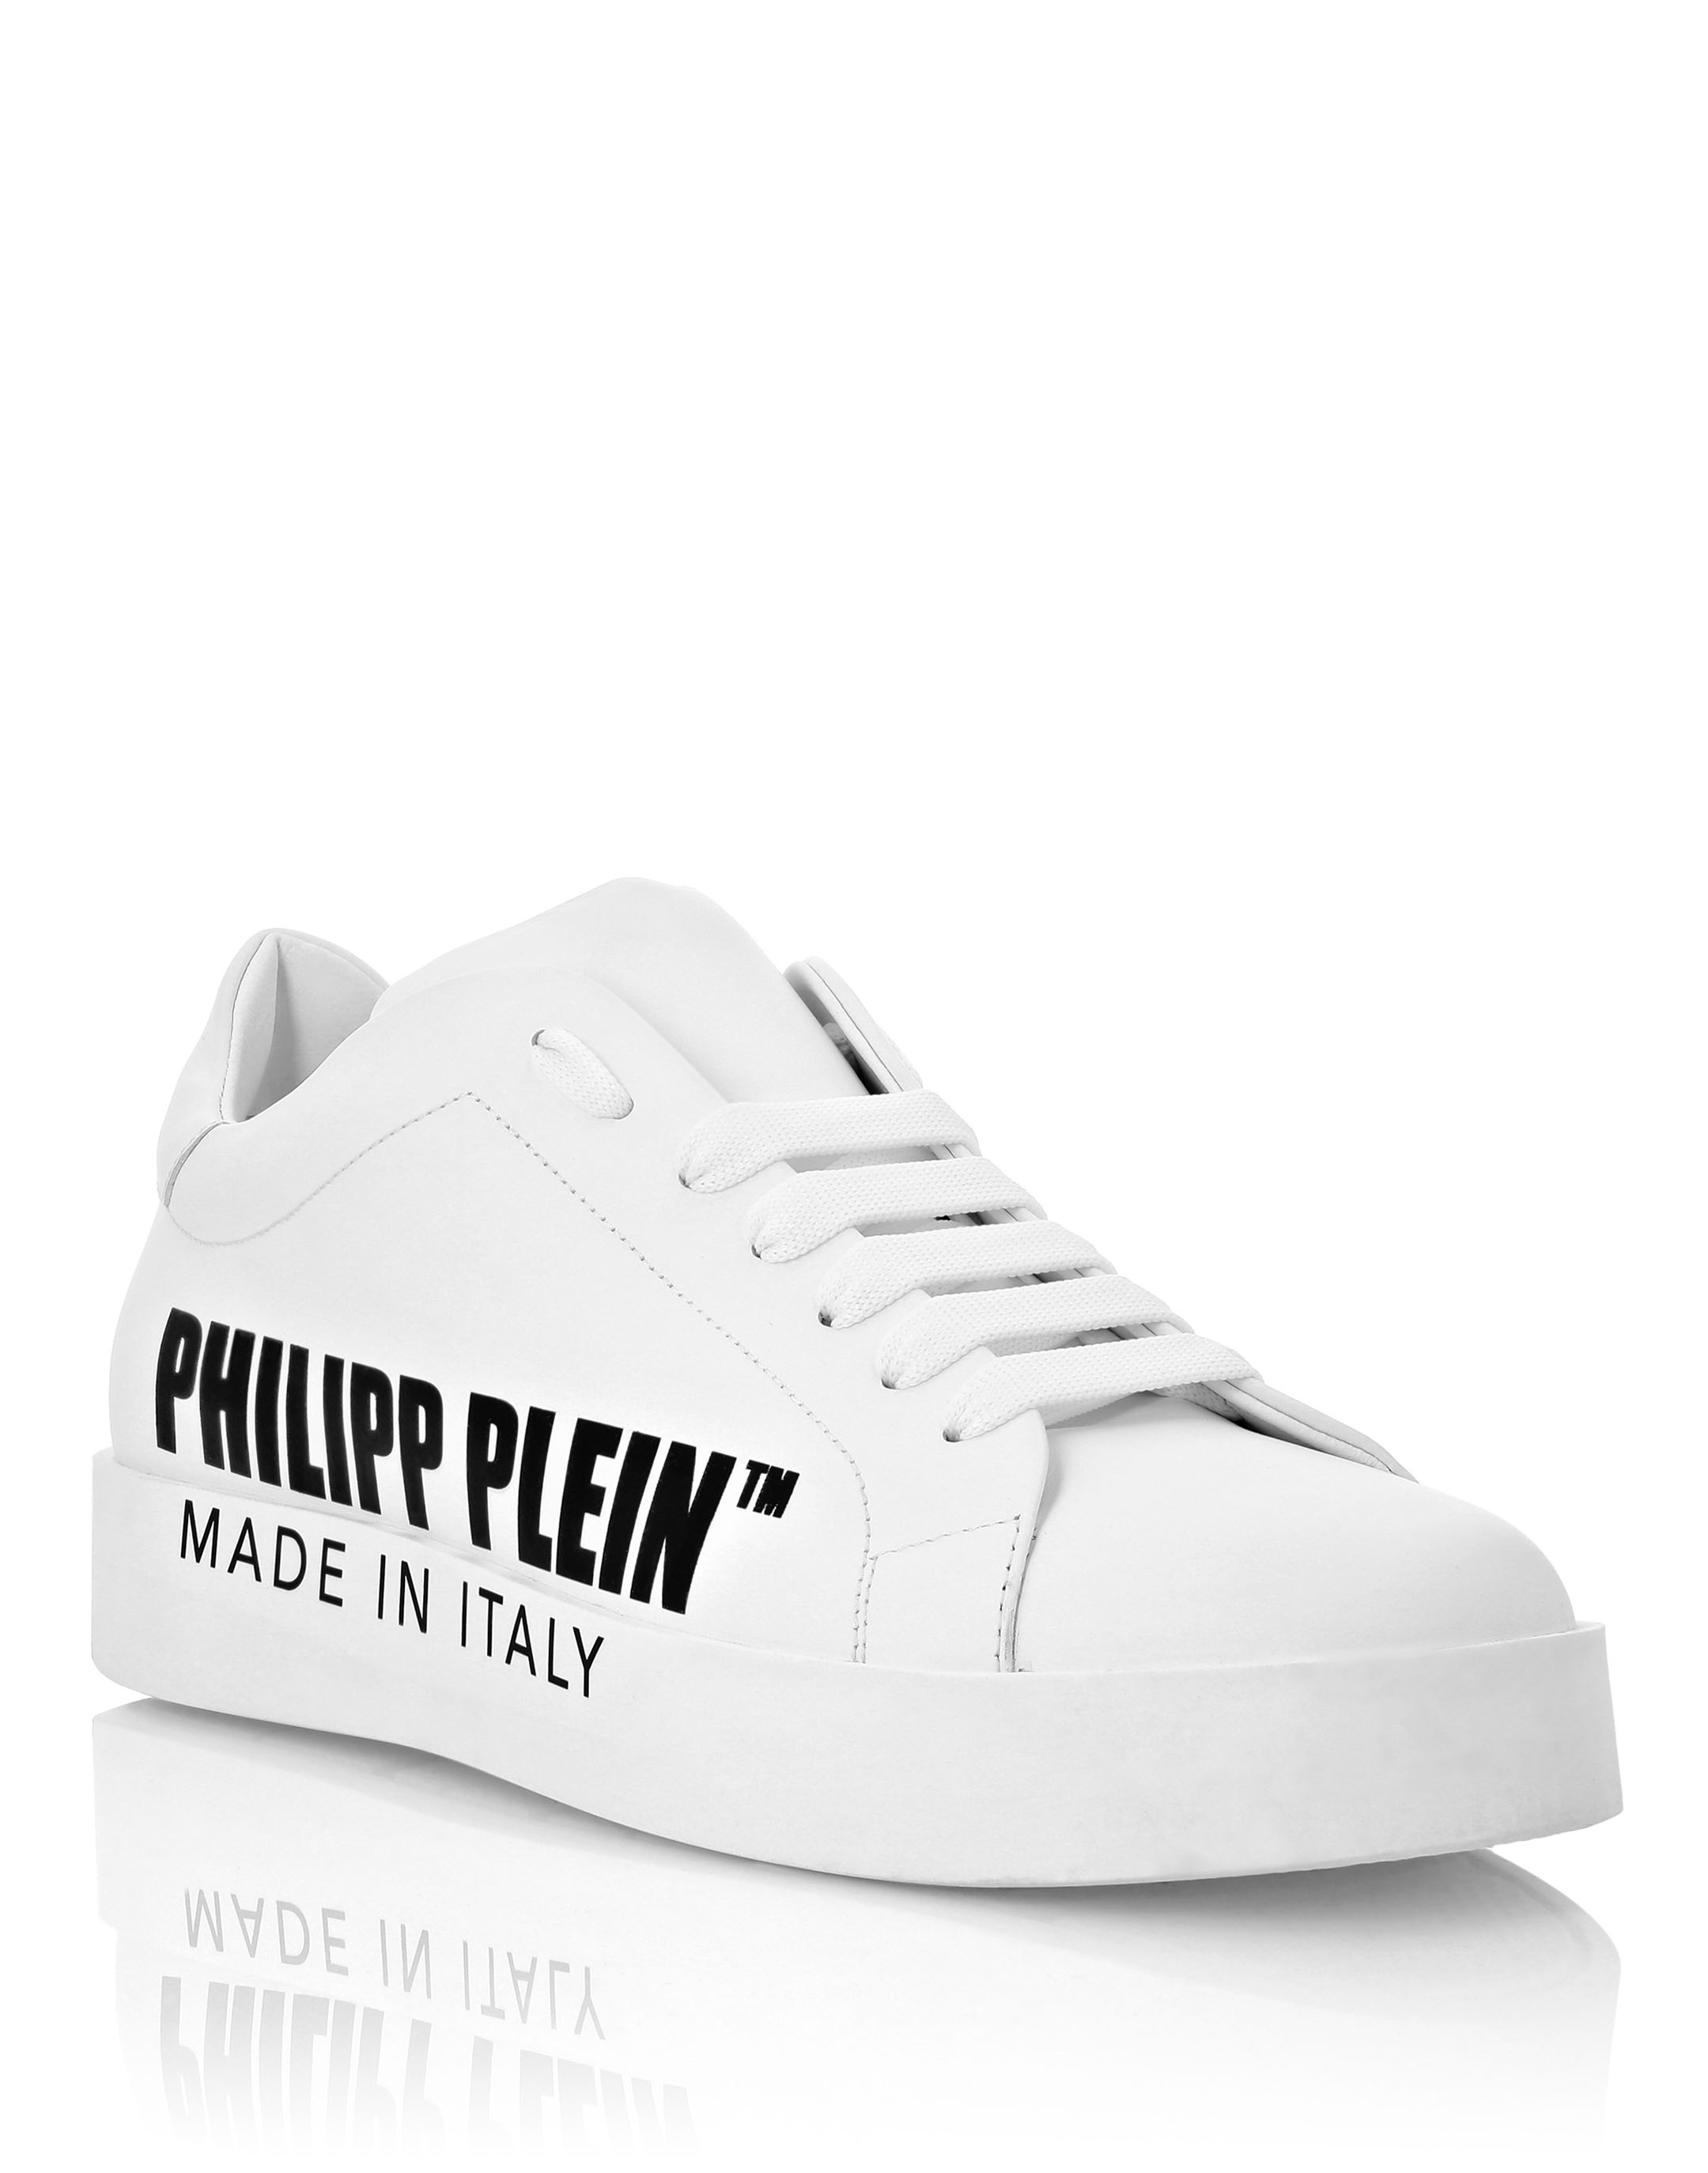 Lo-Top Sneakers Philipp Plein TM | Philipp Plein